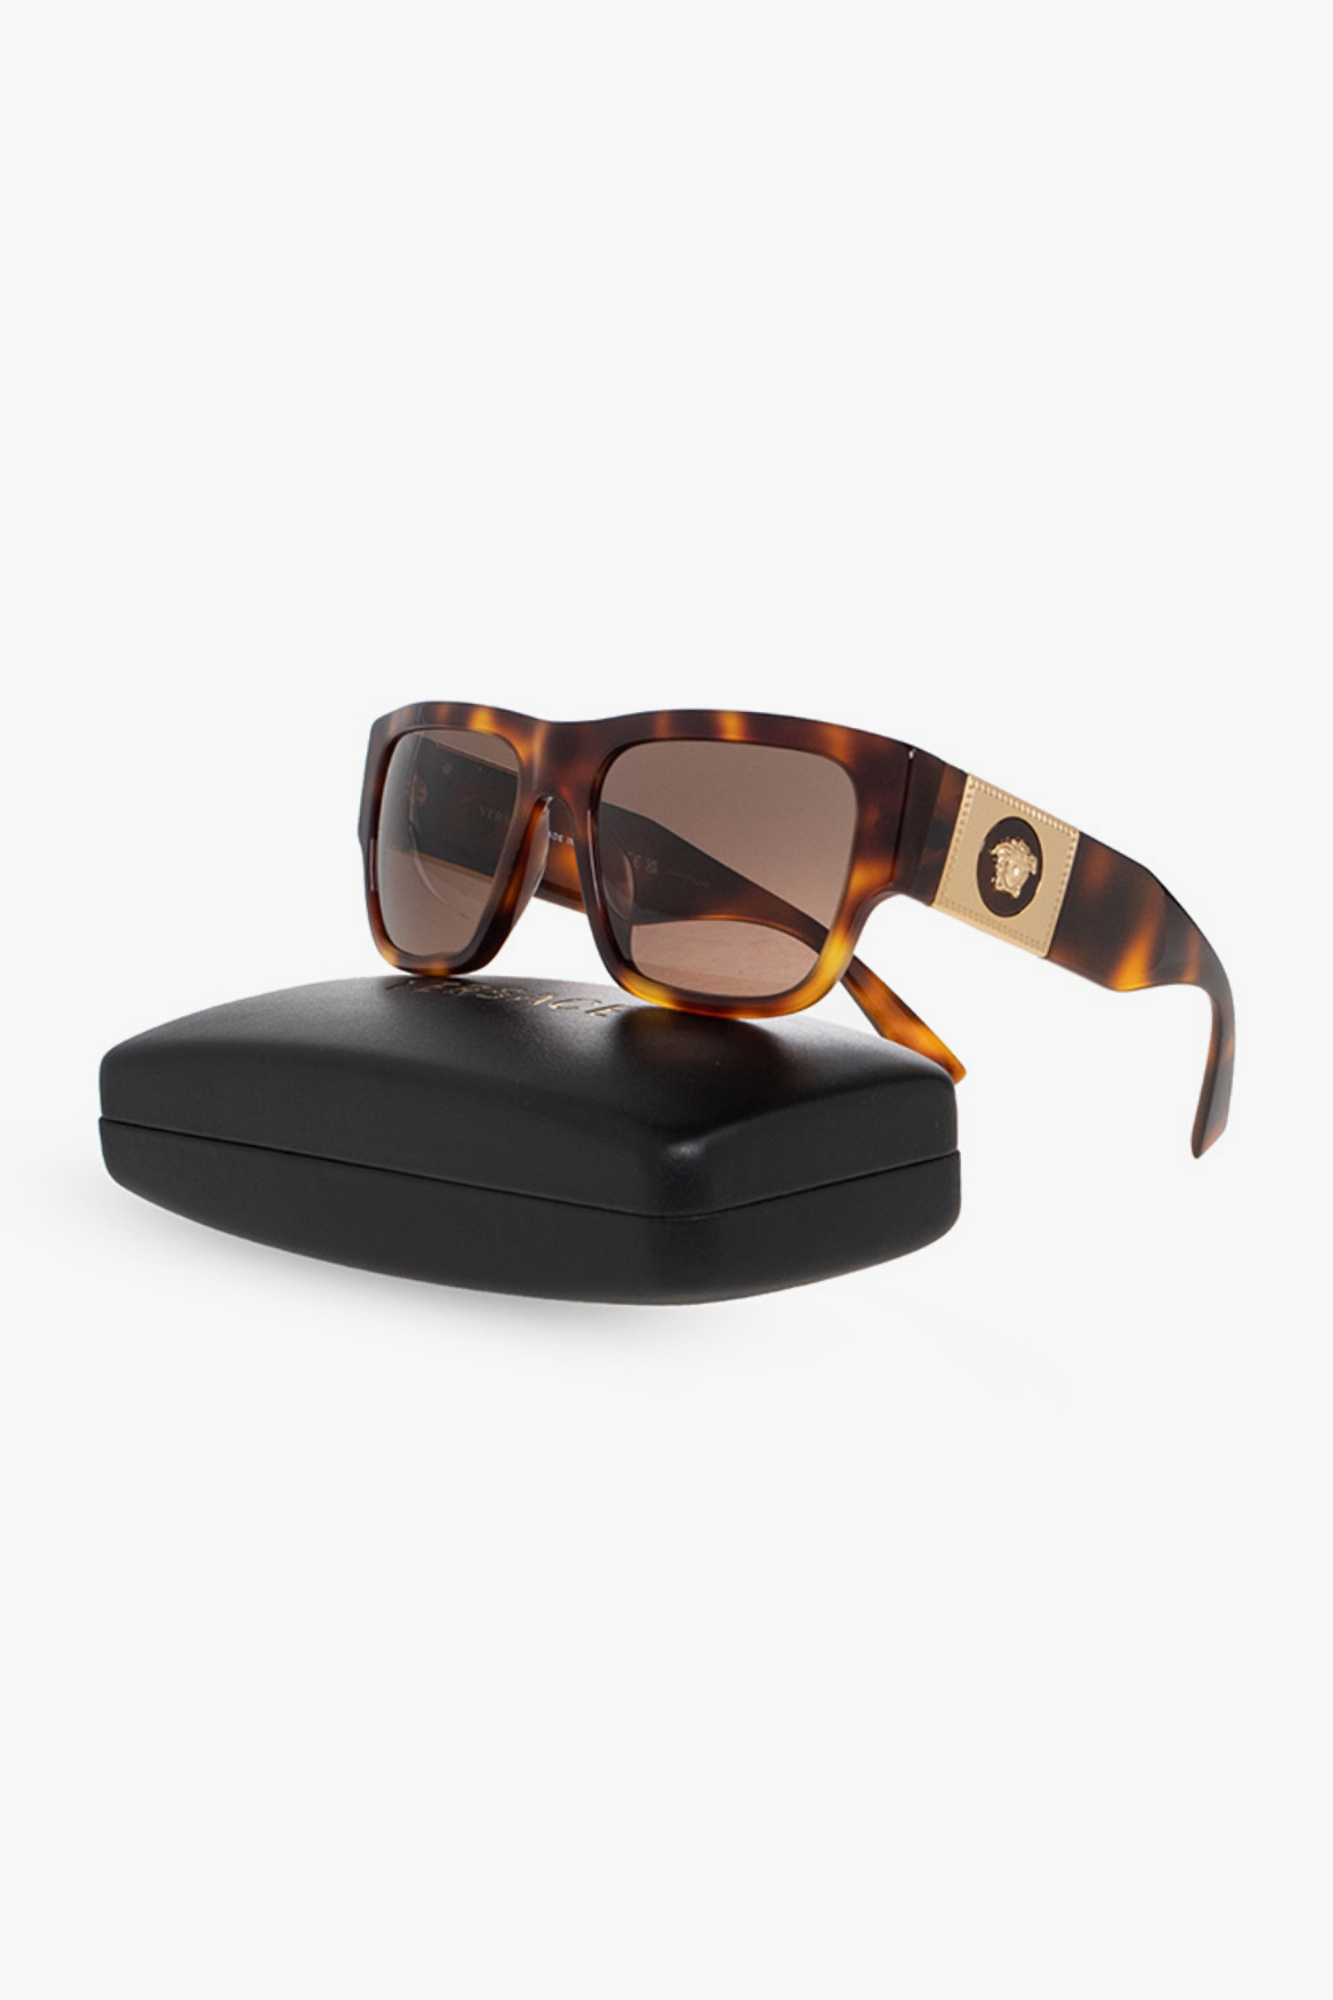 Versace Polaroid aviator style unisex sunglasses